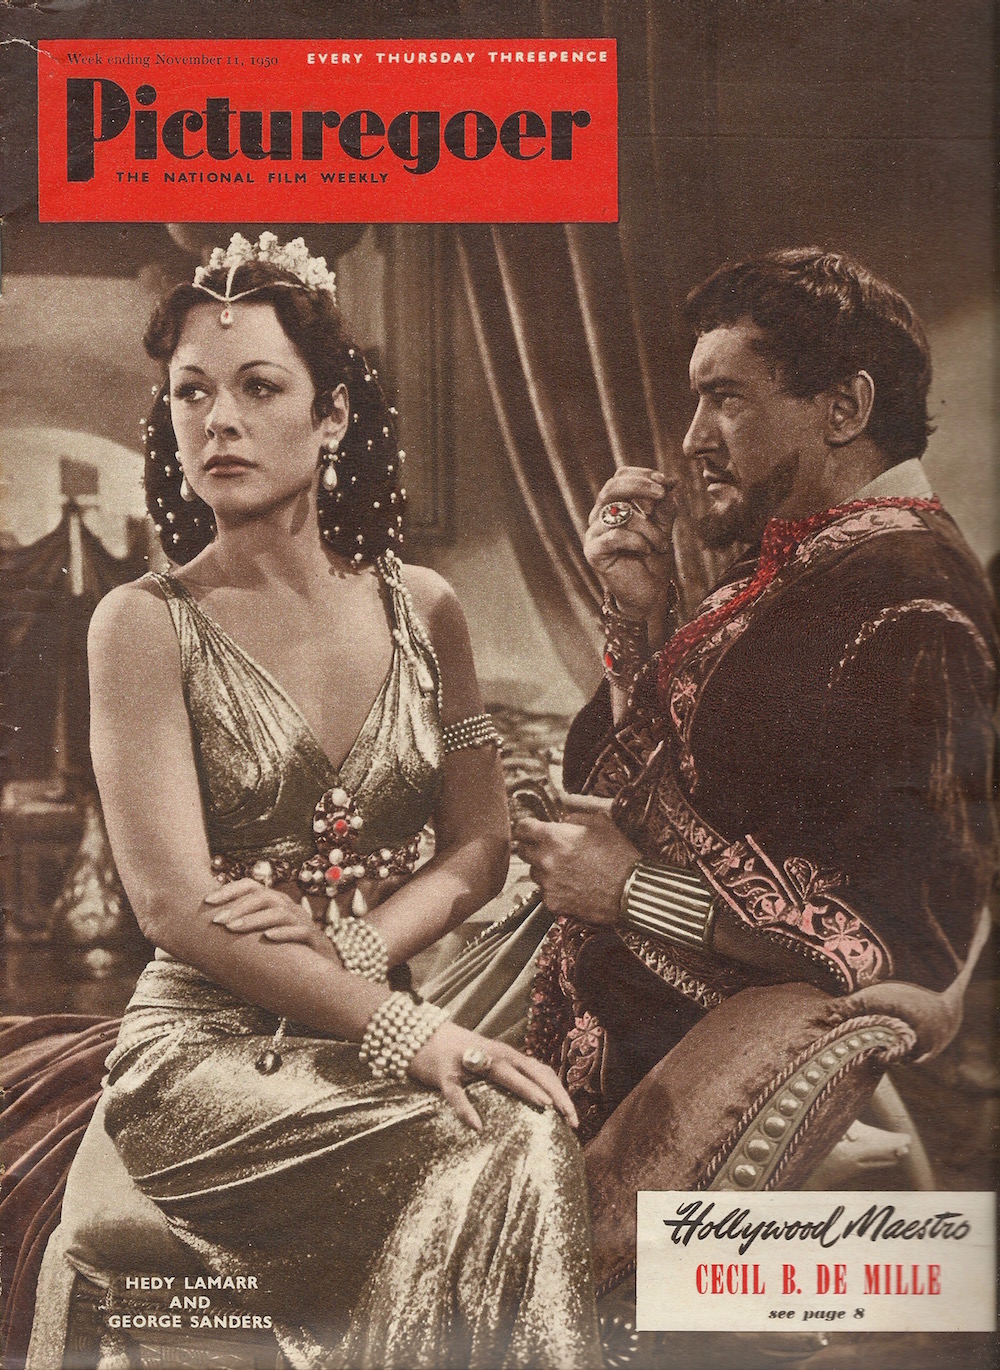 Picturegoer November 11 1950 Hedy Lamarr and George Sanders